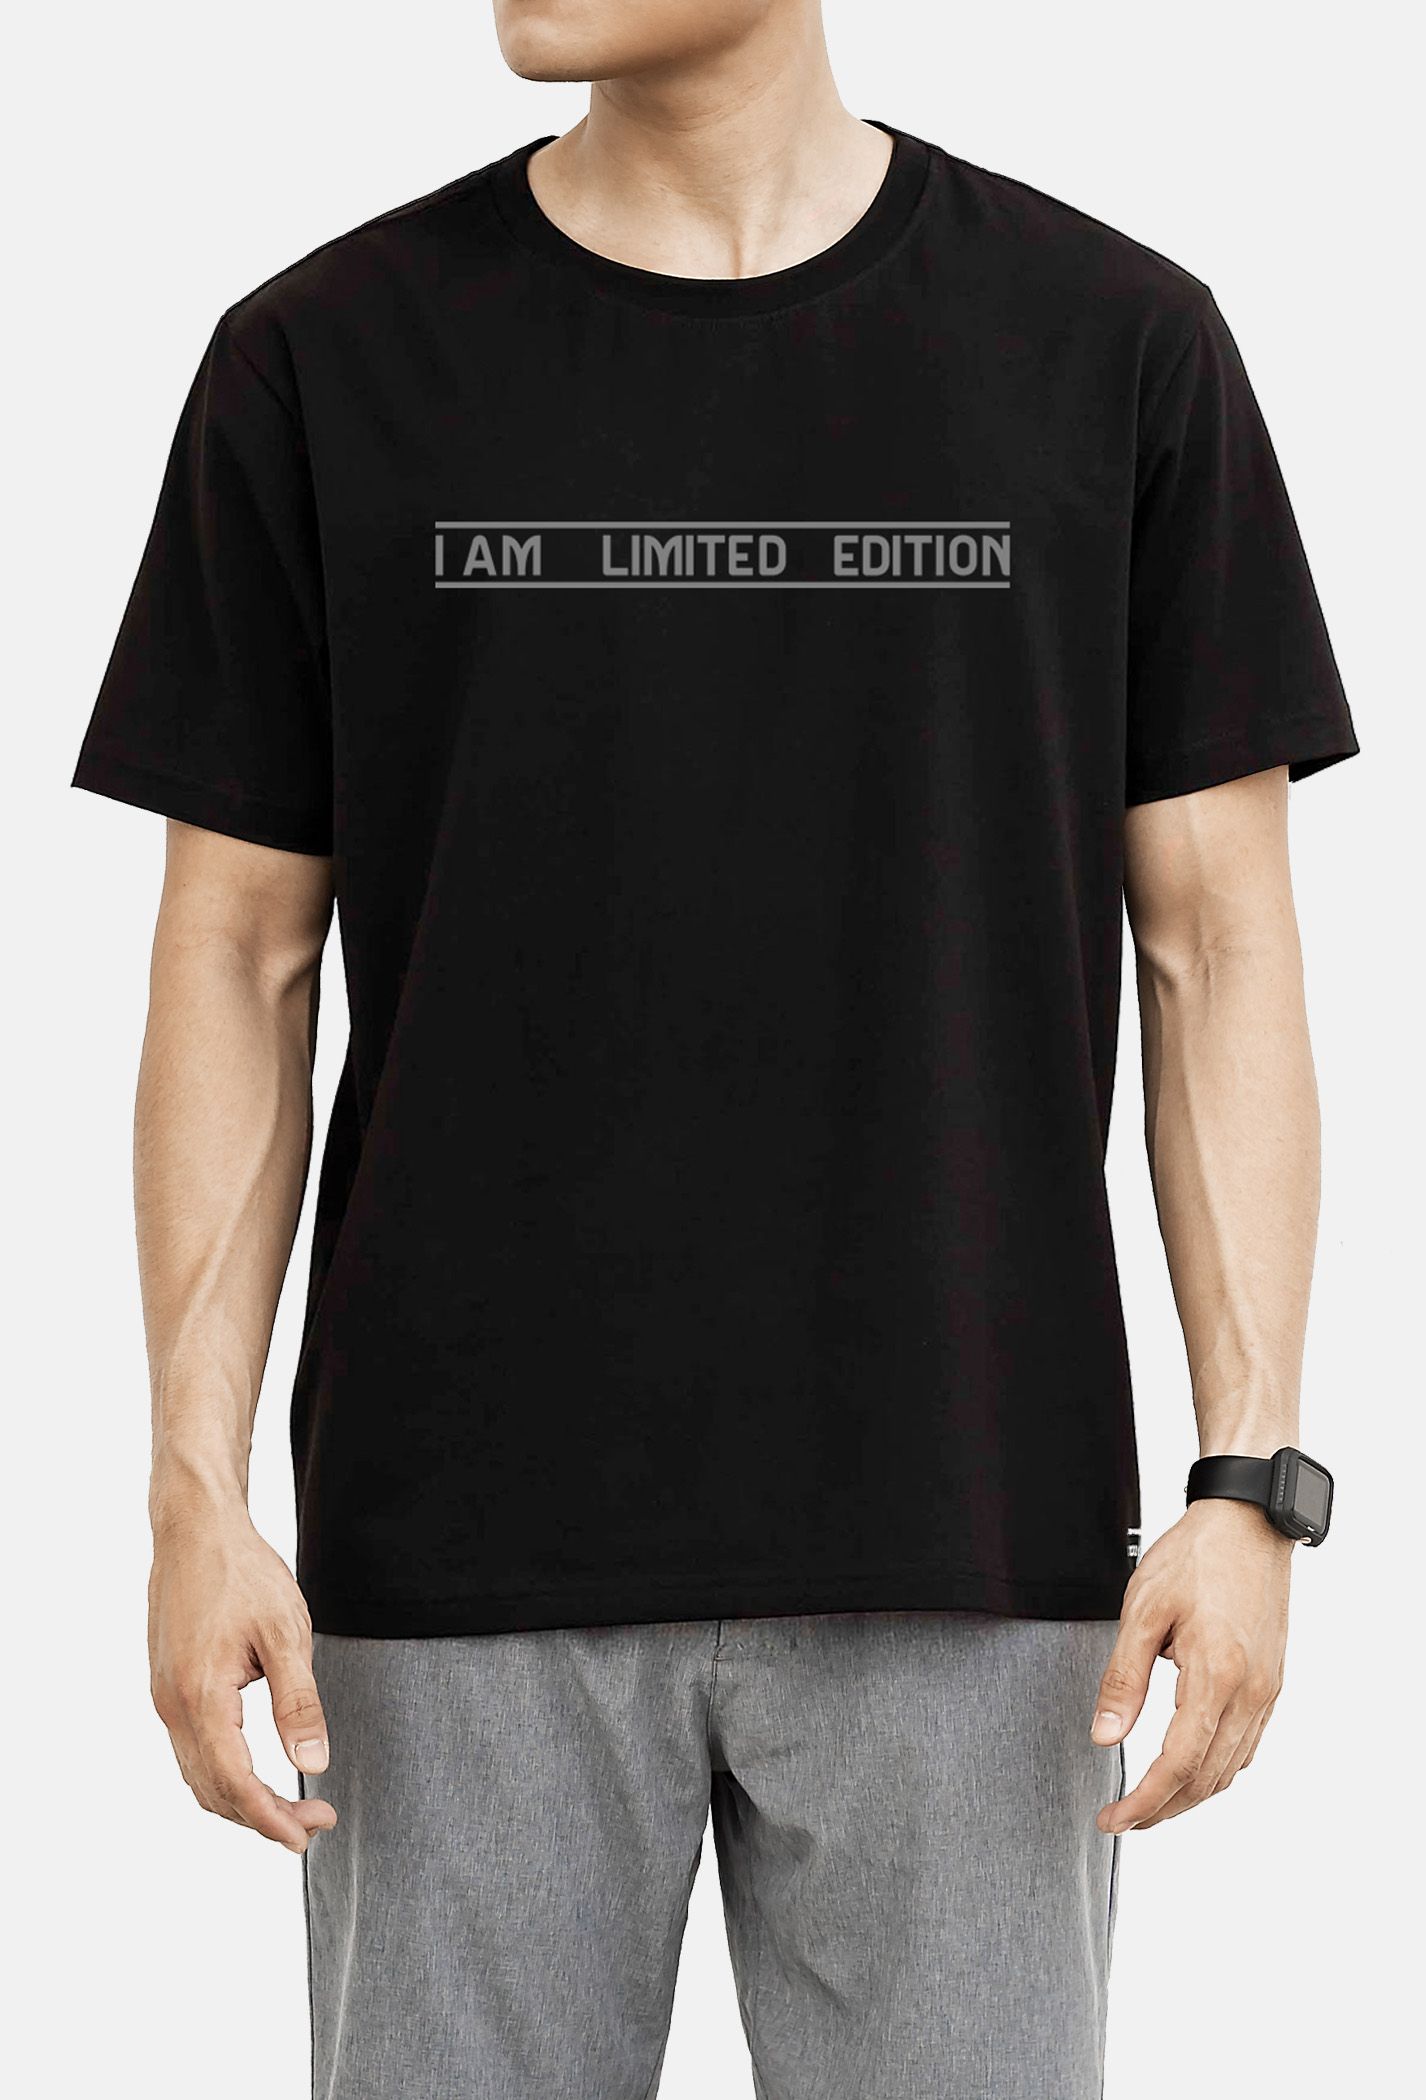 Áo thun Cotton Compact in "I AM LIMITED" in phản quang - Màu đen  1